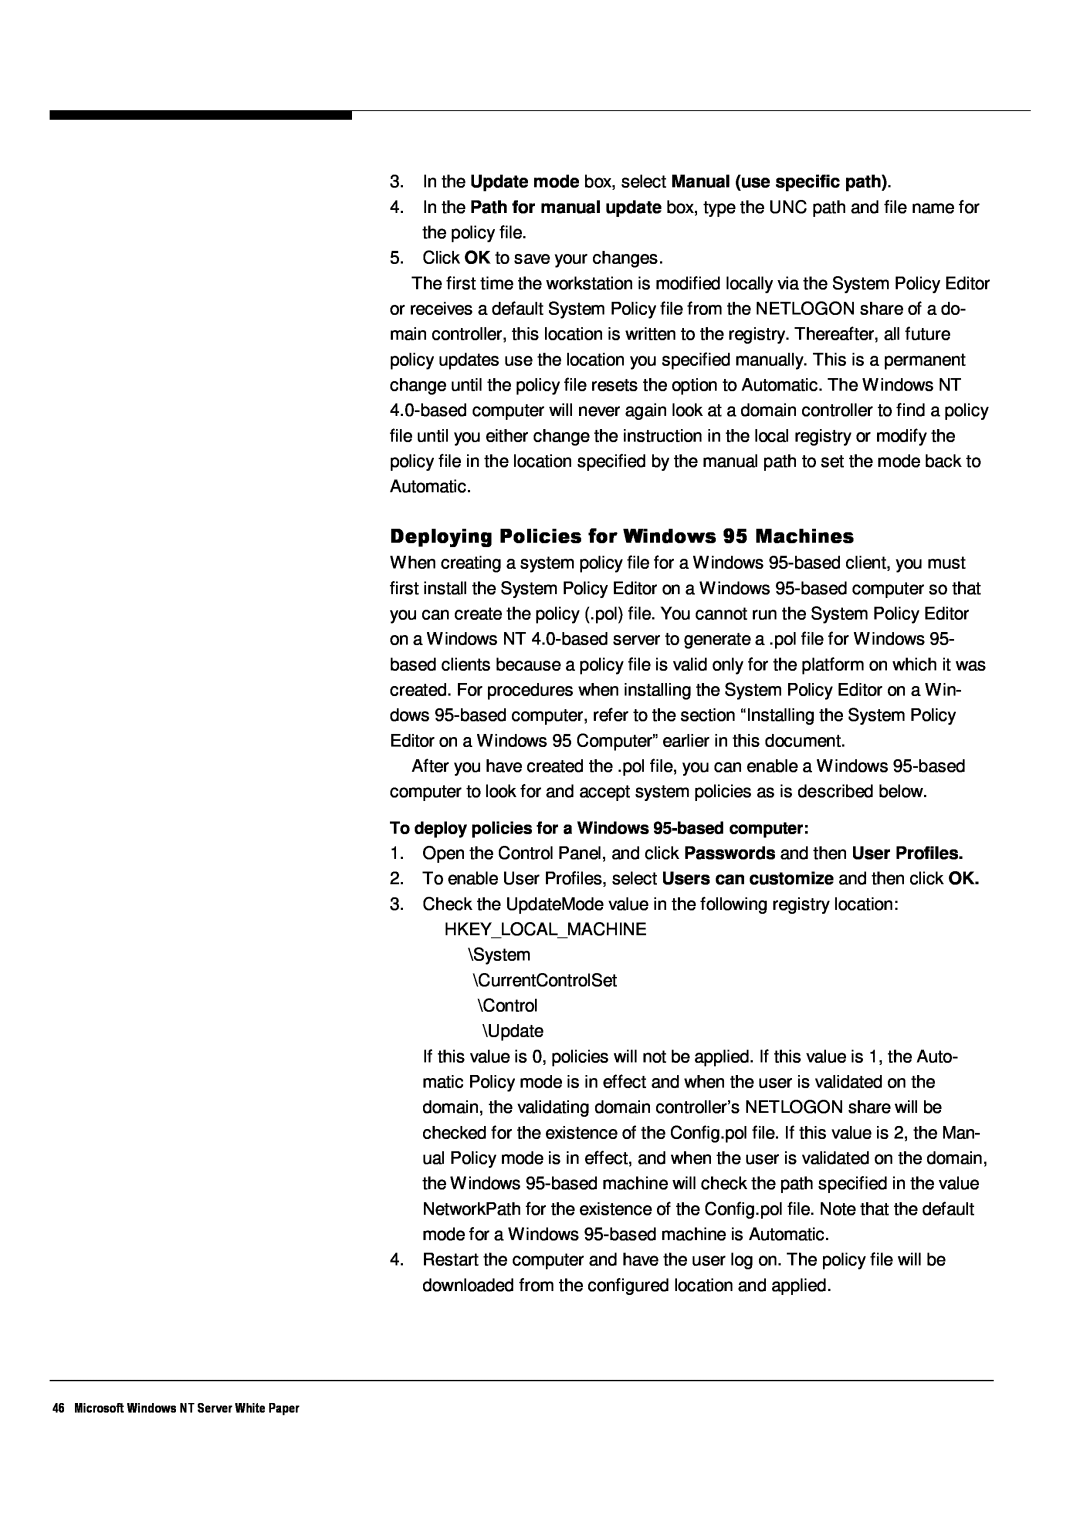 Microsoft Windows NT 4.0 manual Deploying Policies for Windows 95 Machines 